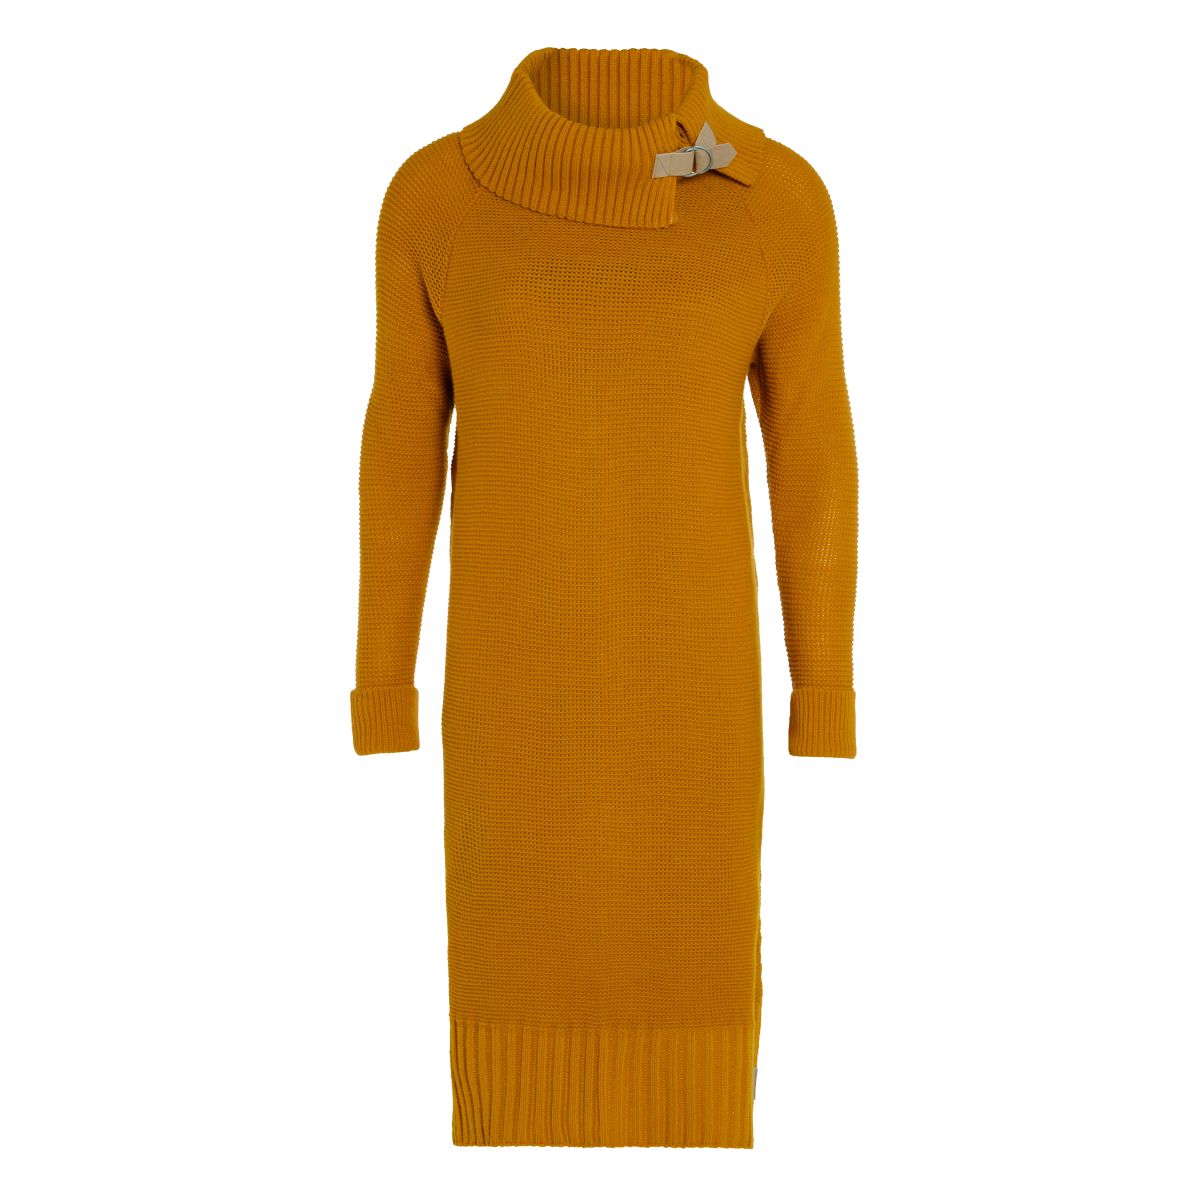 jamie knitted dress ochre 3638